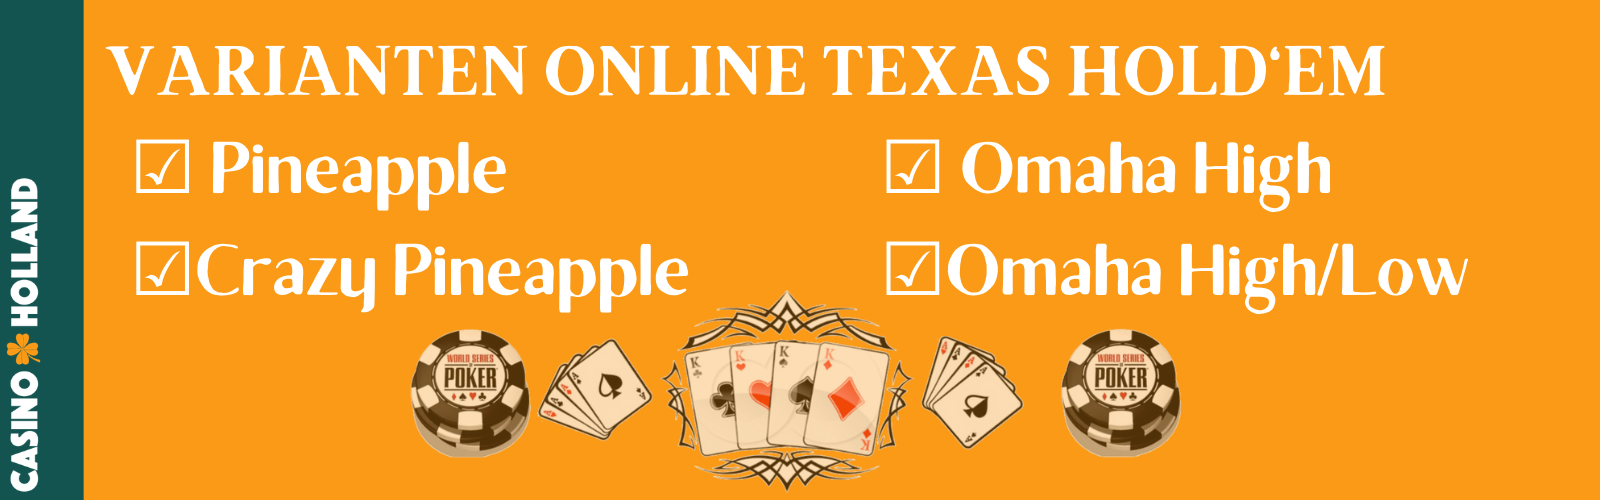 Online Texas Holdem Varianten